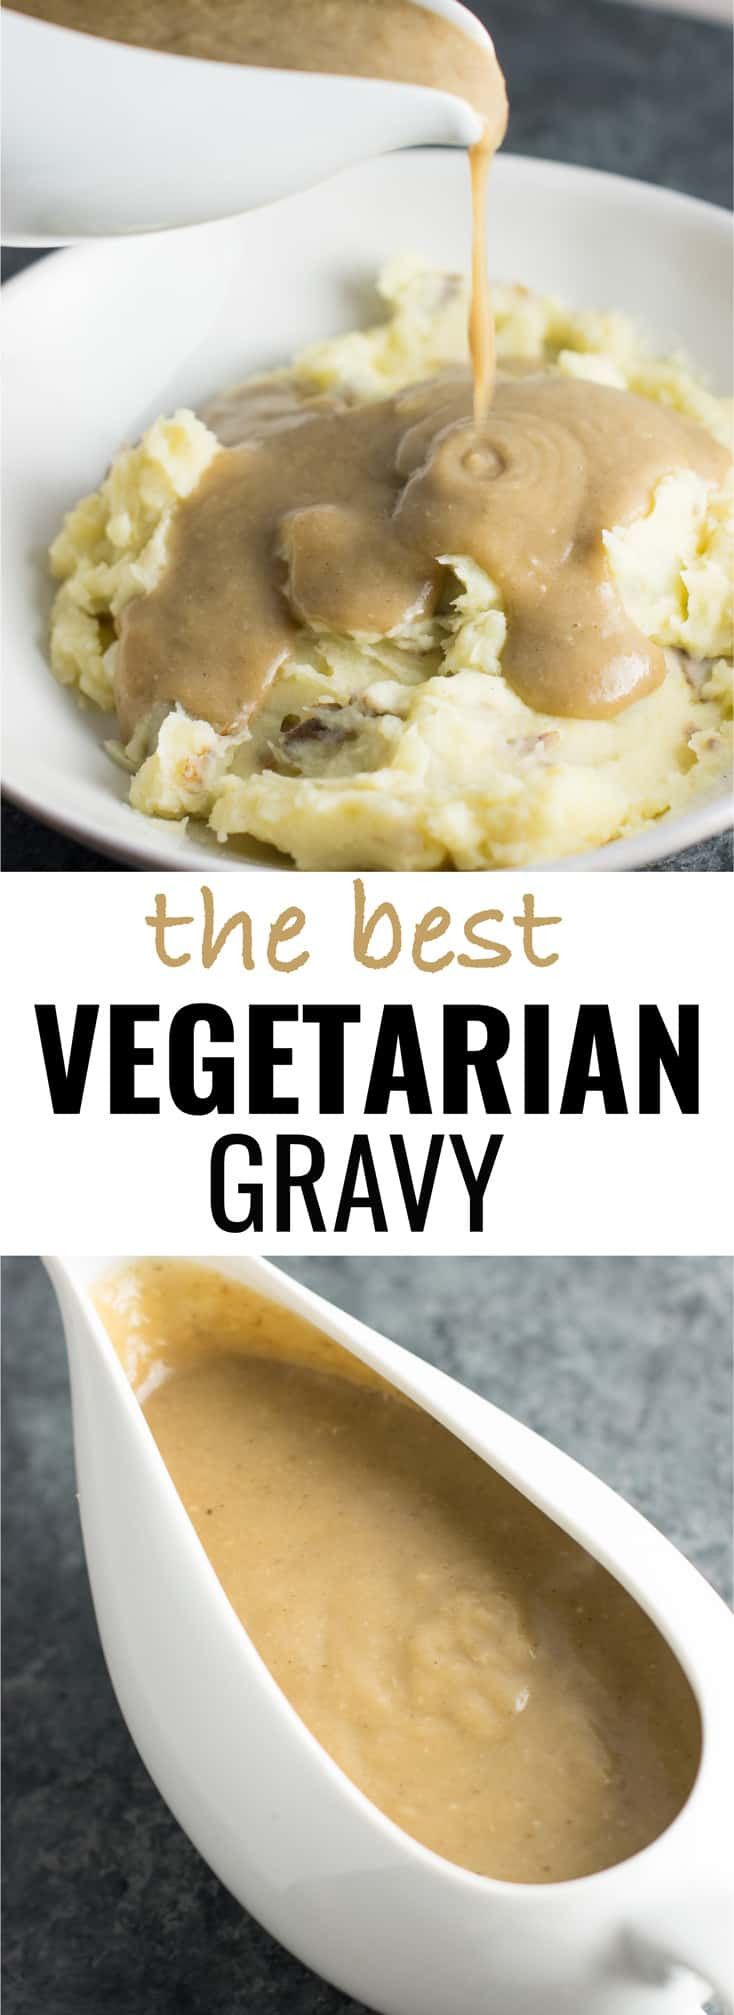 Best Vegetarian Gravy
 The Best Ve arian Gravy Recipe Build Your Bite